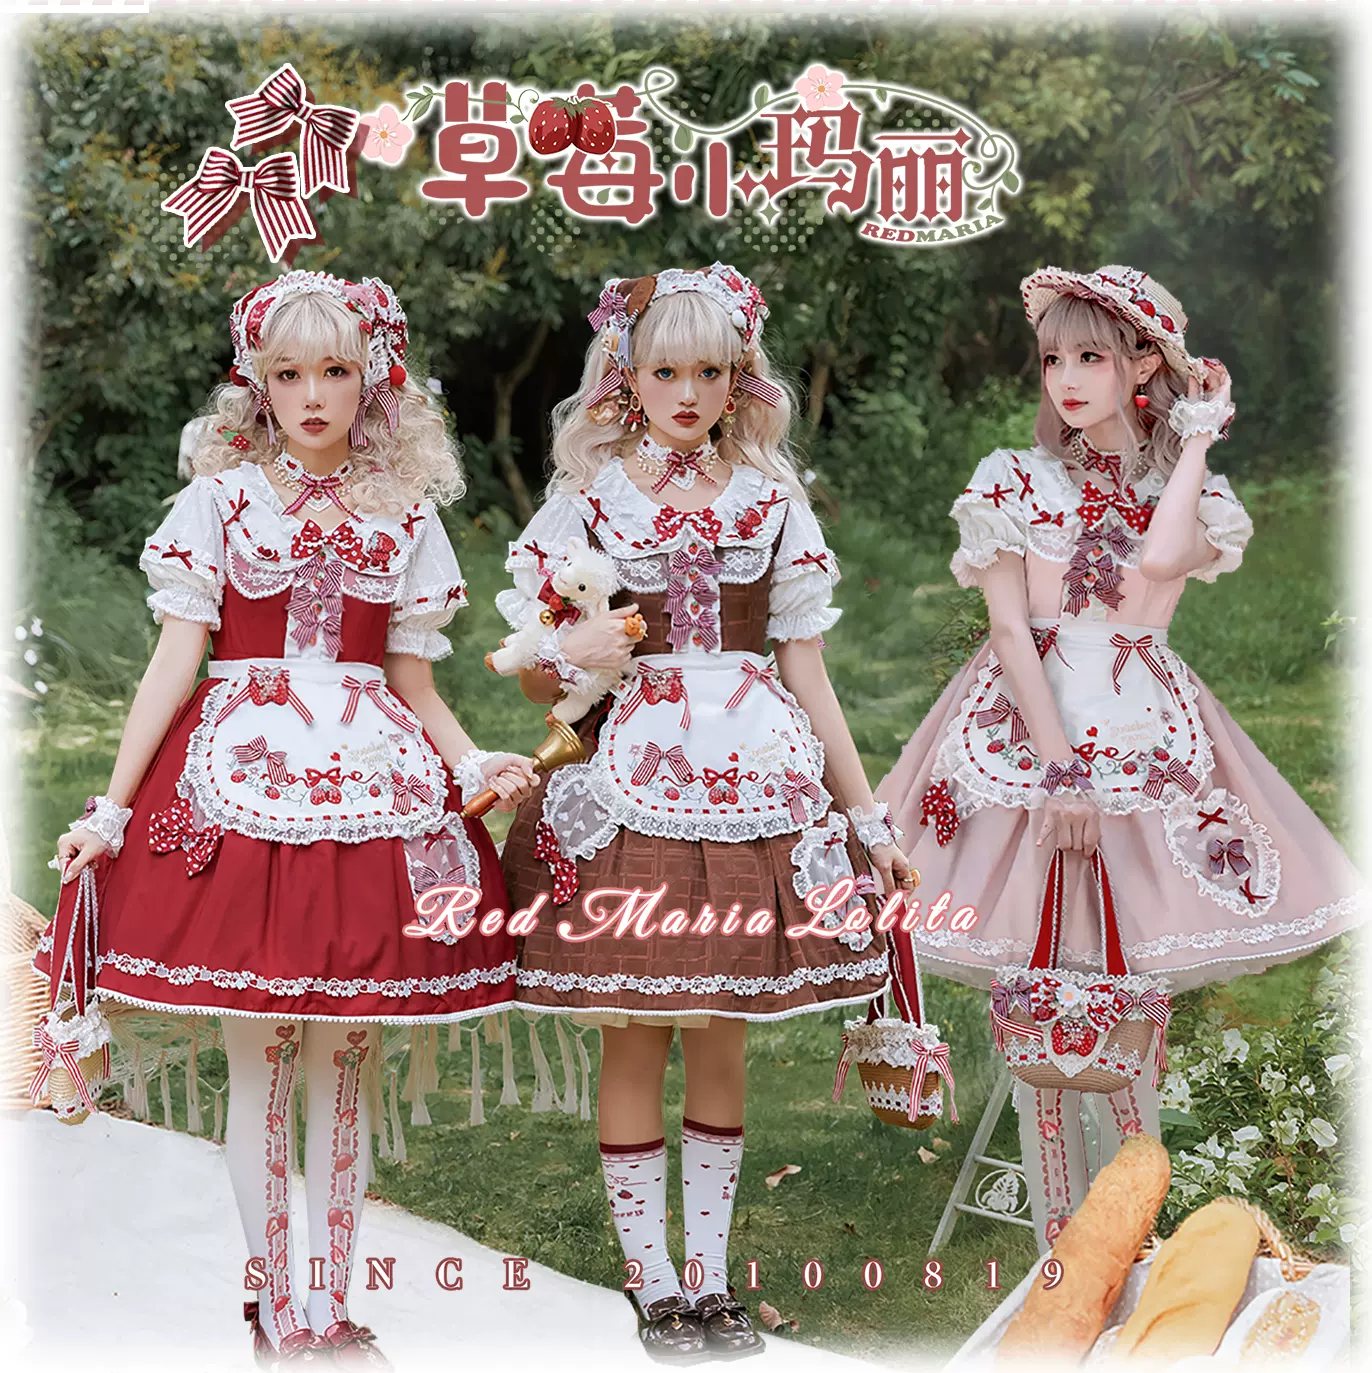 red maria 12周年記念絶版ドレス 宝石姫 ロリータ - スーツ/フォーマル 